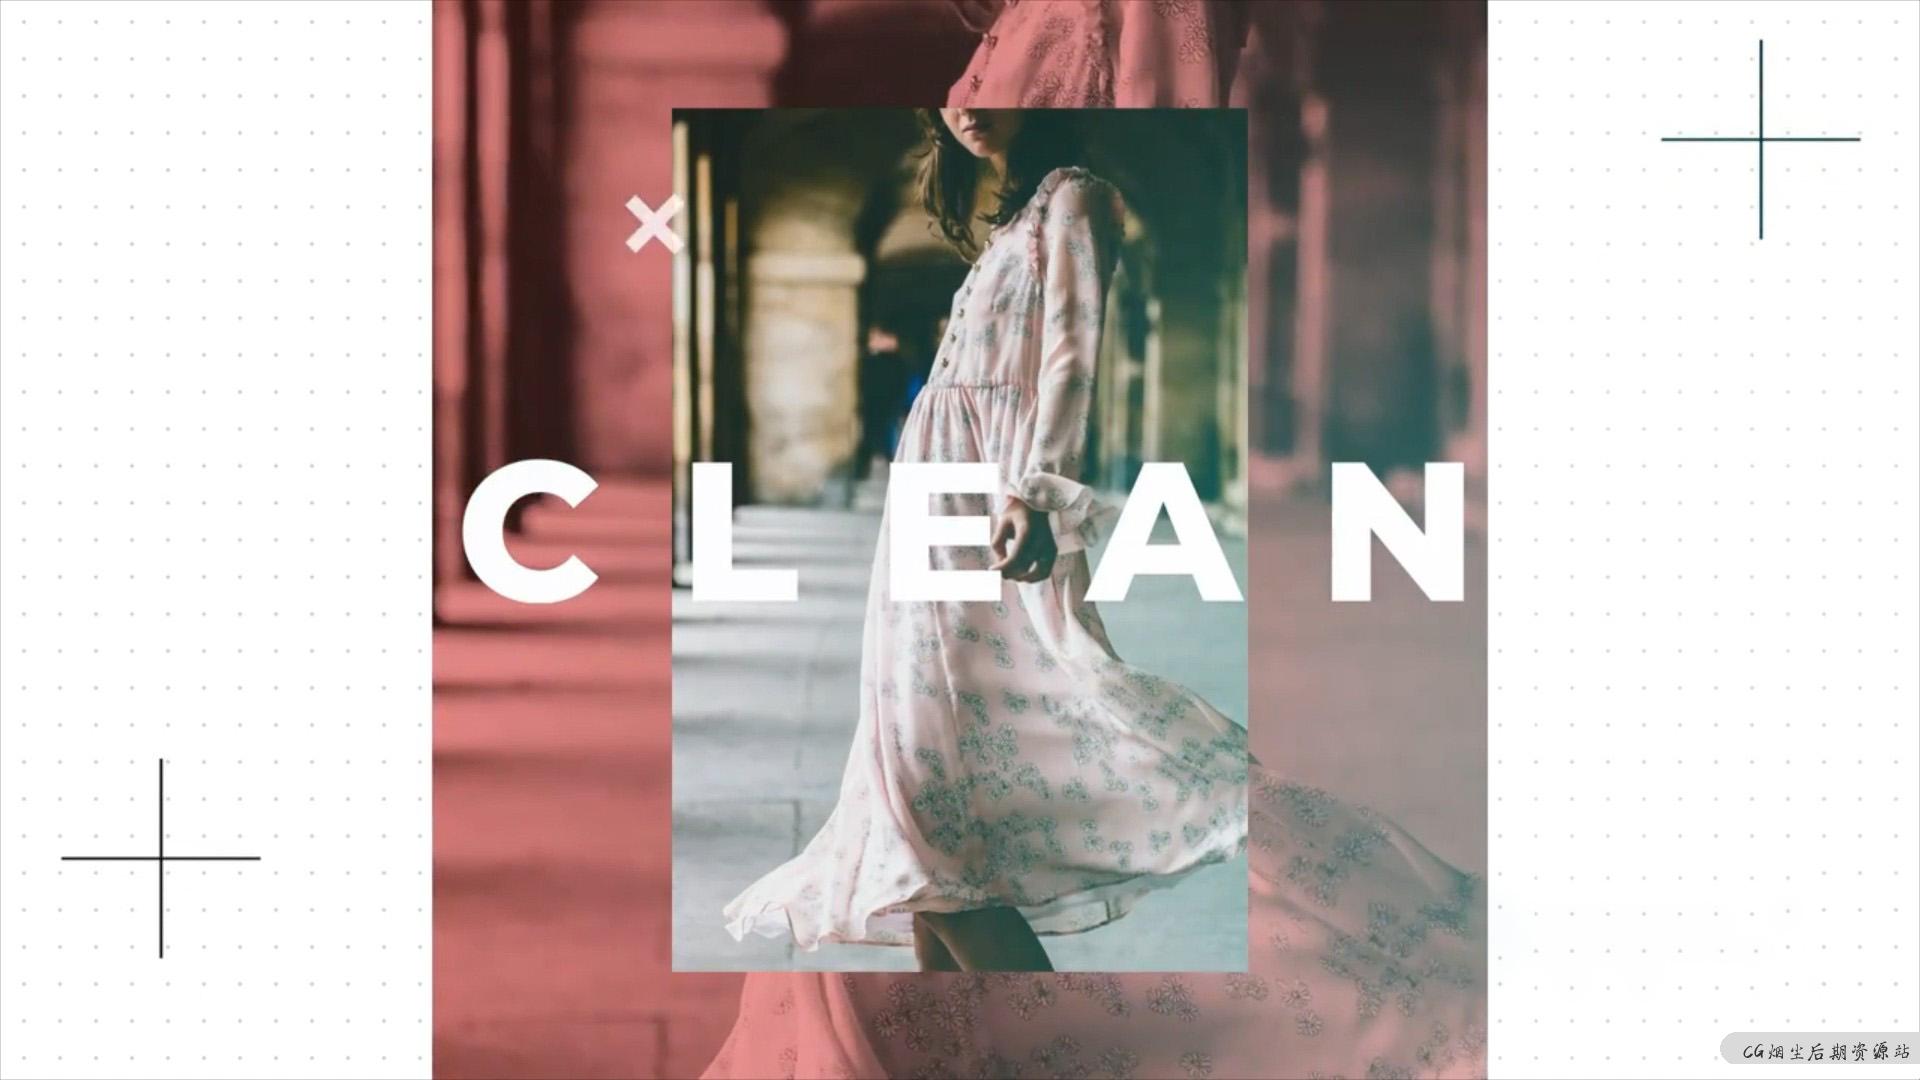 fcpx主题模板 流行时尚写真个人展示开场片头 Clean Fashion Opener